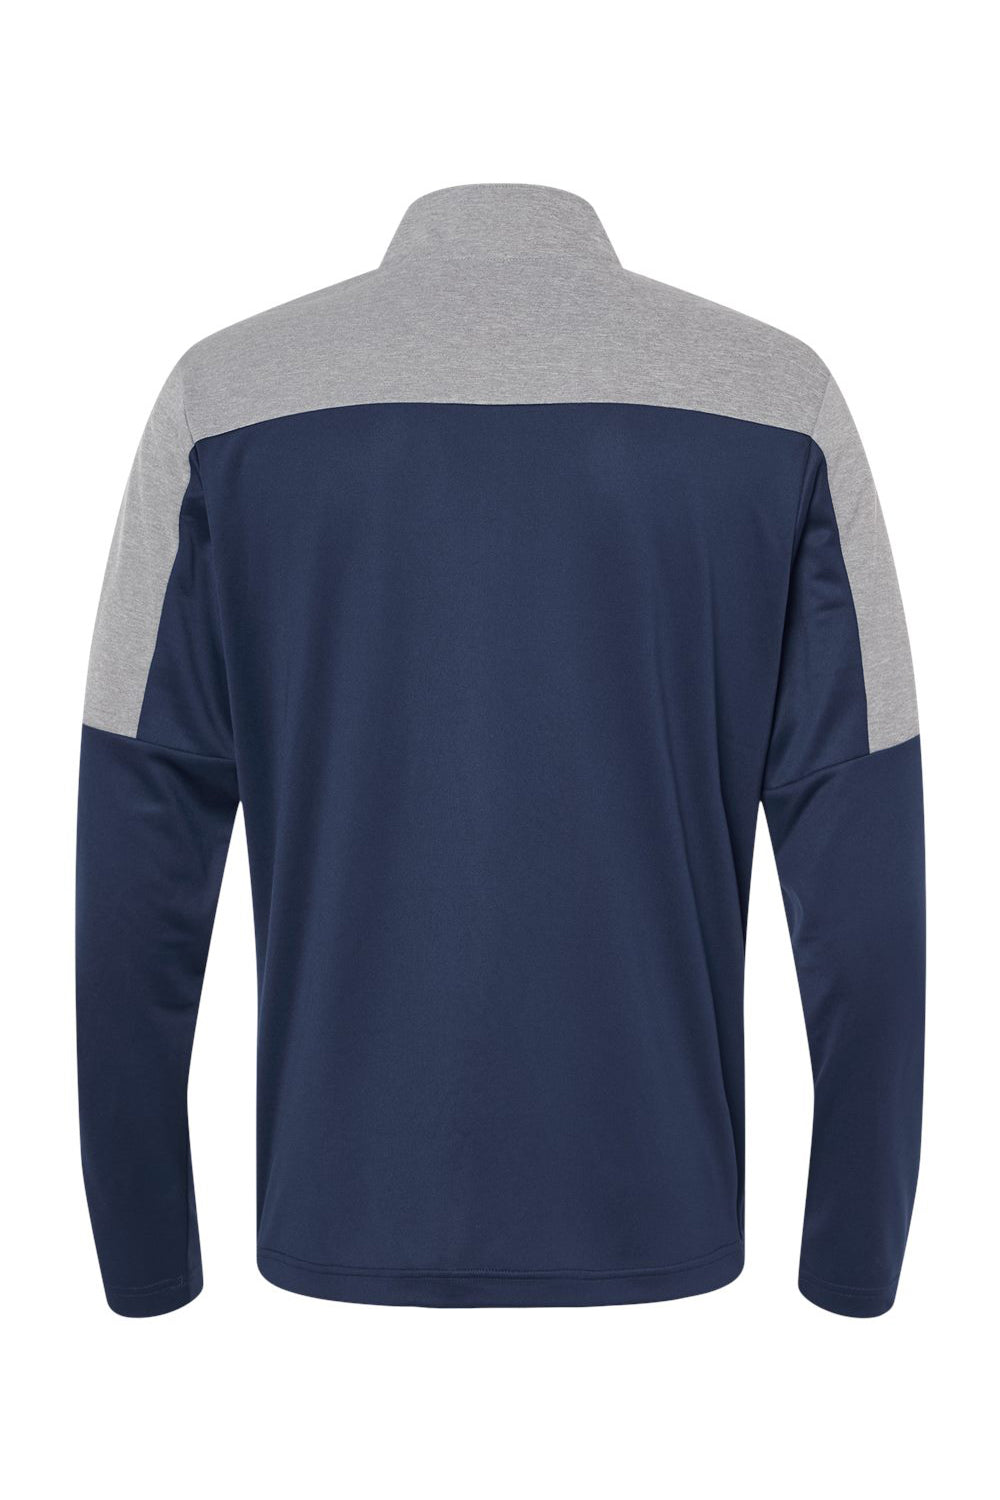 Adidas A552 Mens Moisture Wicking 1/4 Zip Sweatshirt Collegiate Navy Blue/Grey Melange Flat Back